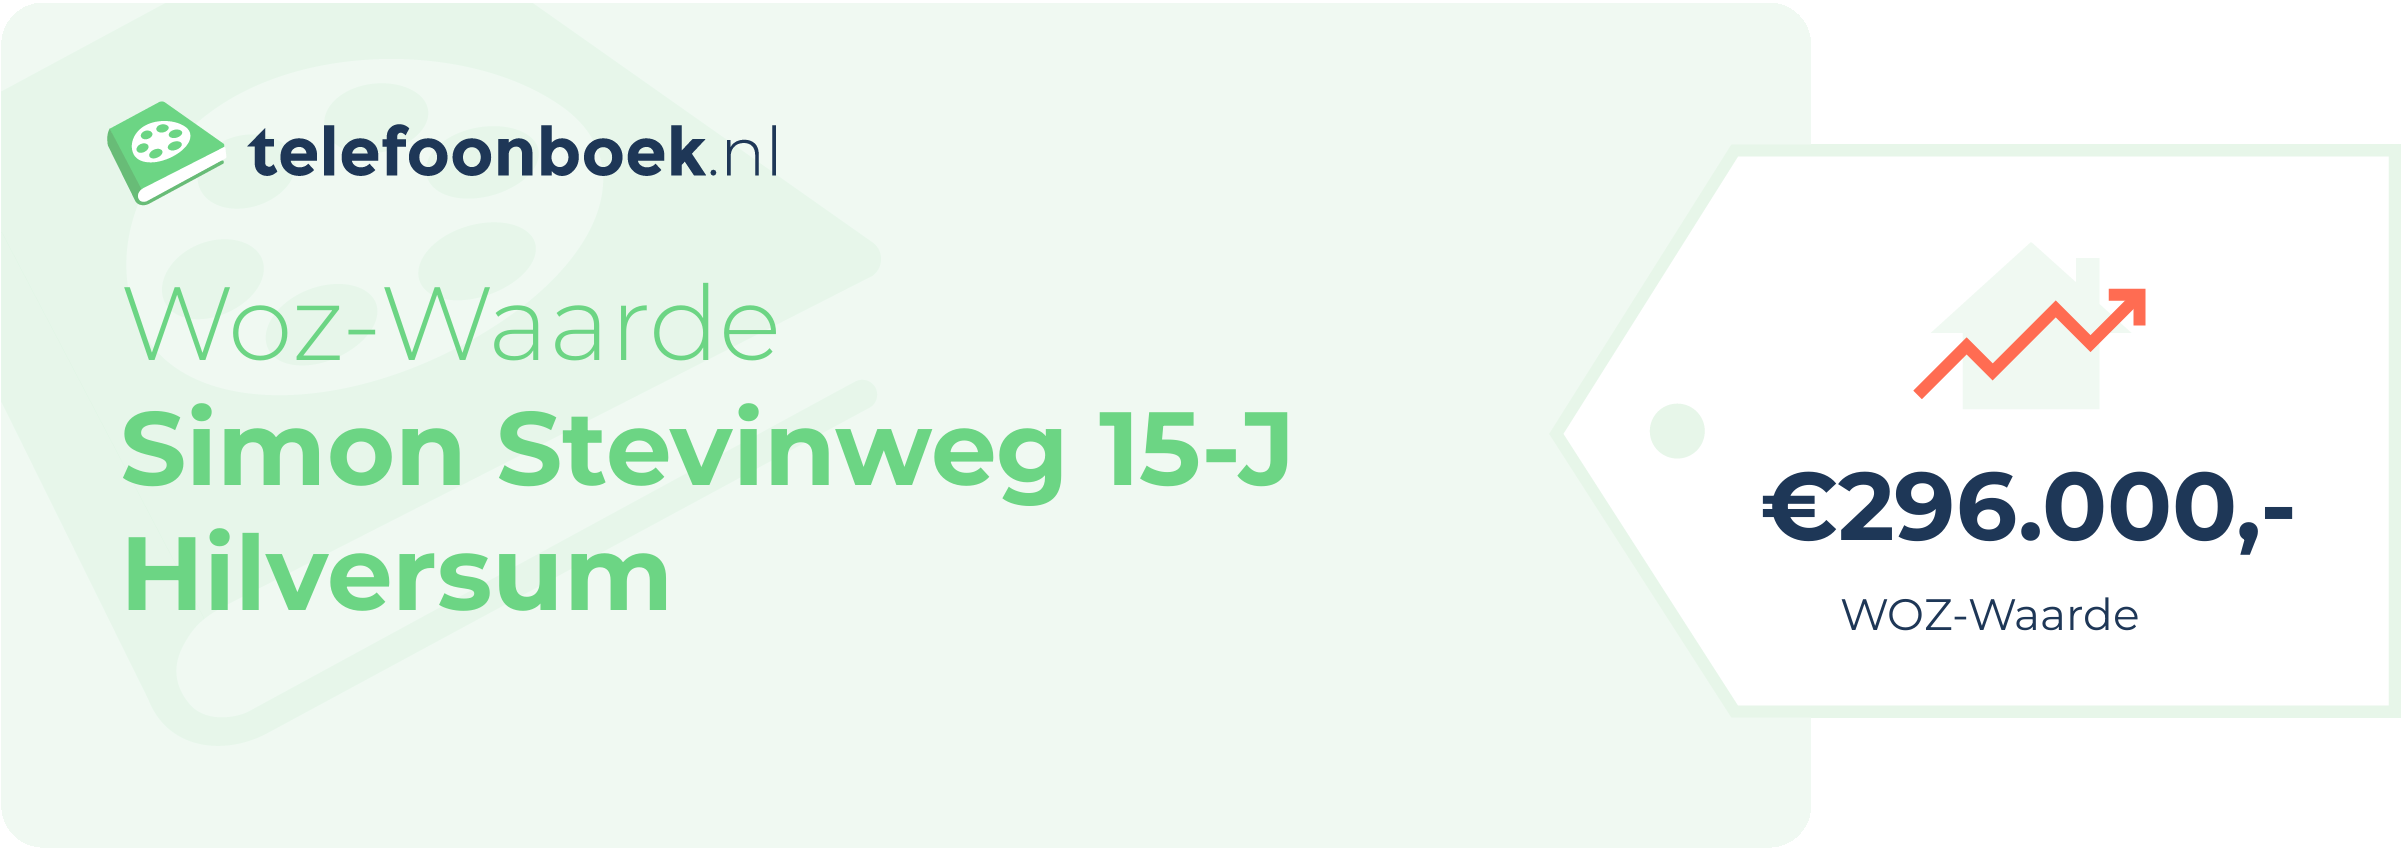 WOZ-waarde Simon Stevinweg 15-J Hilversum